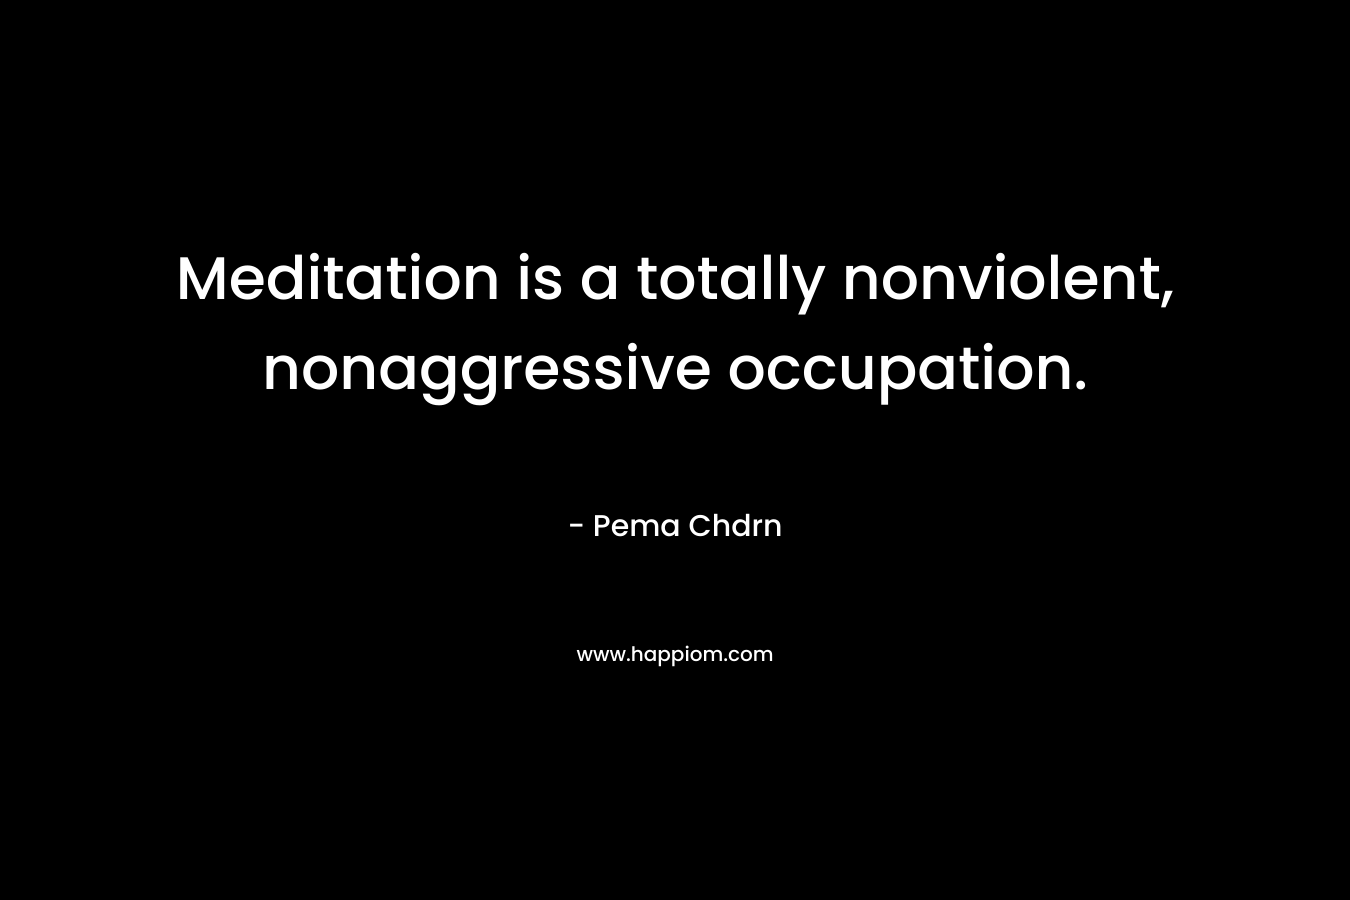 Meditation is a totally nonviolent, nonaggressive occupation.